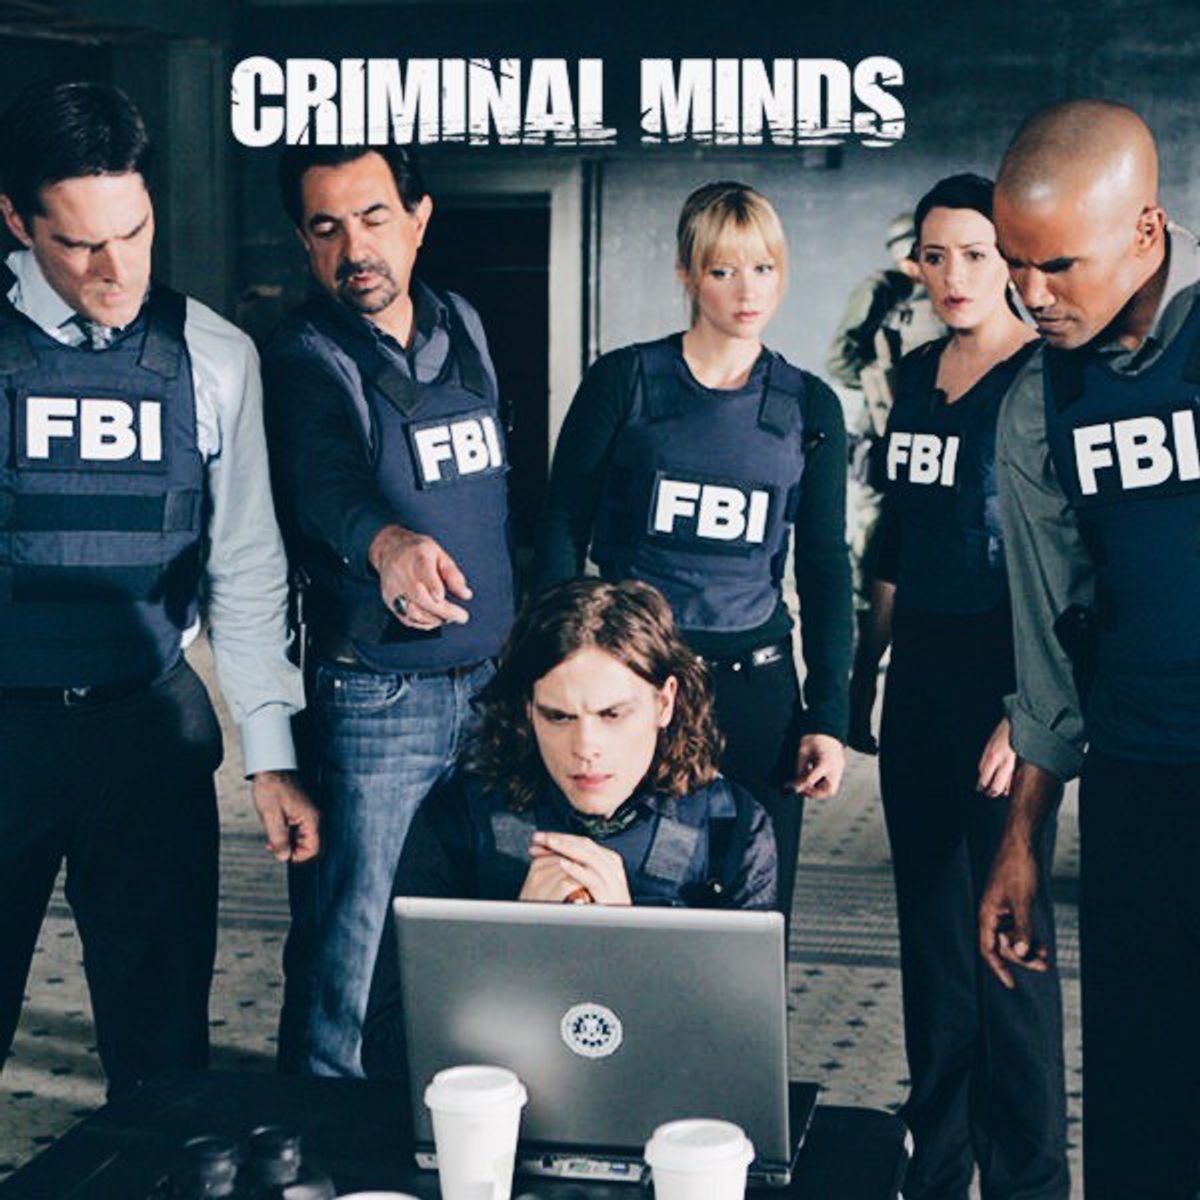 4 FBI TV Shows To Watch On Netflix